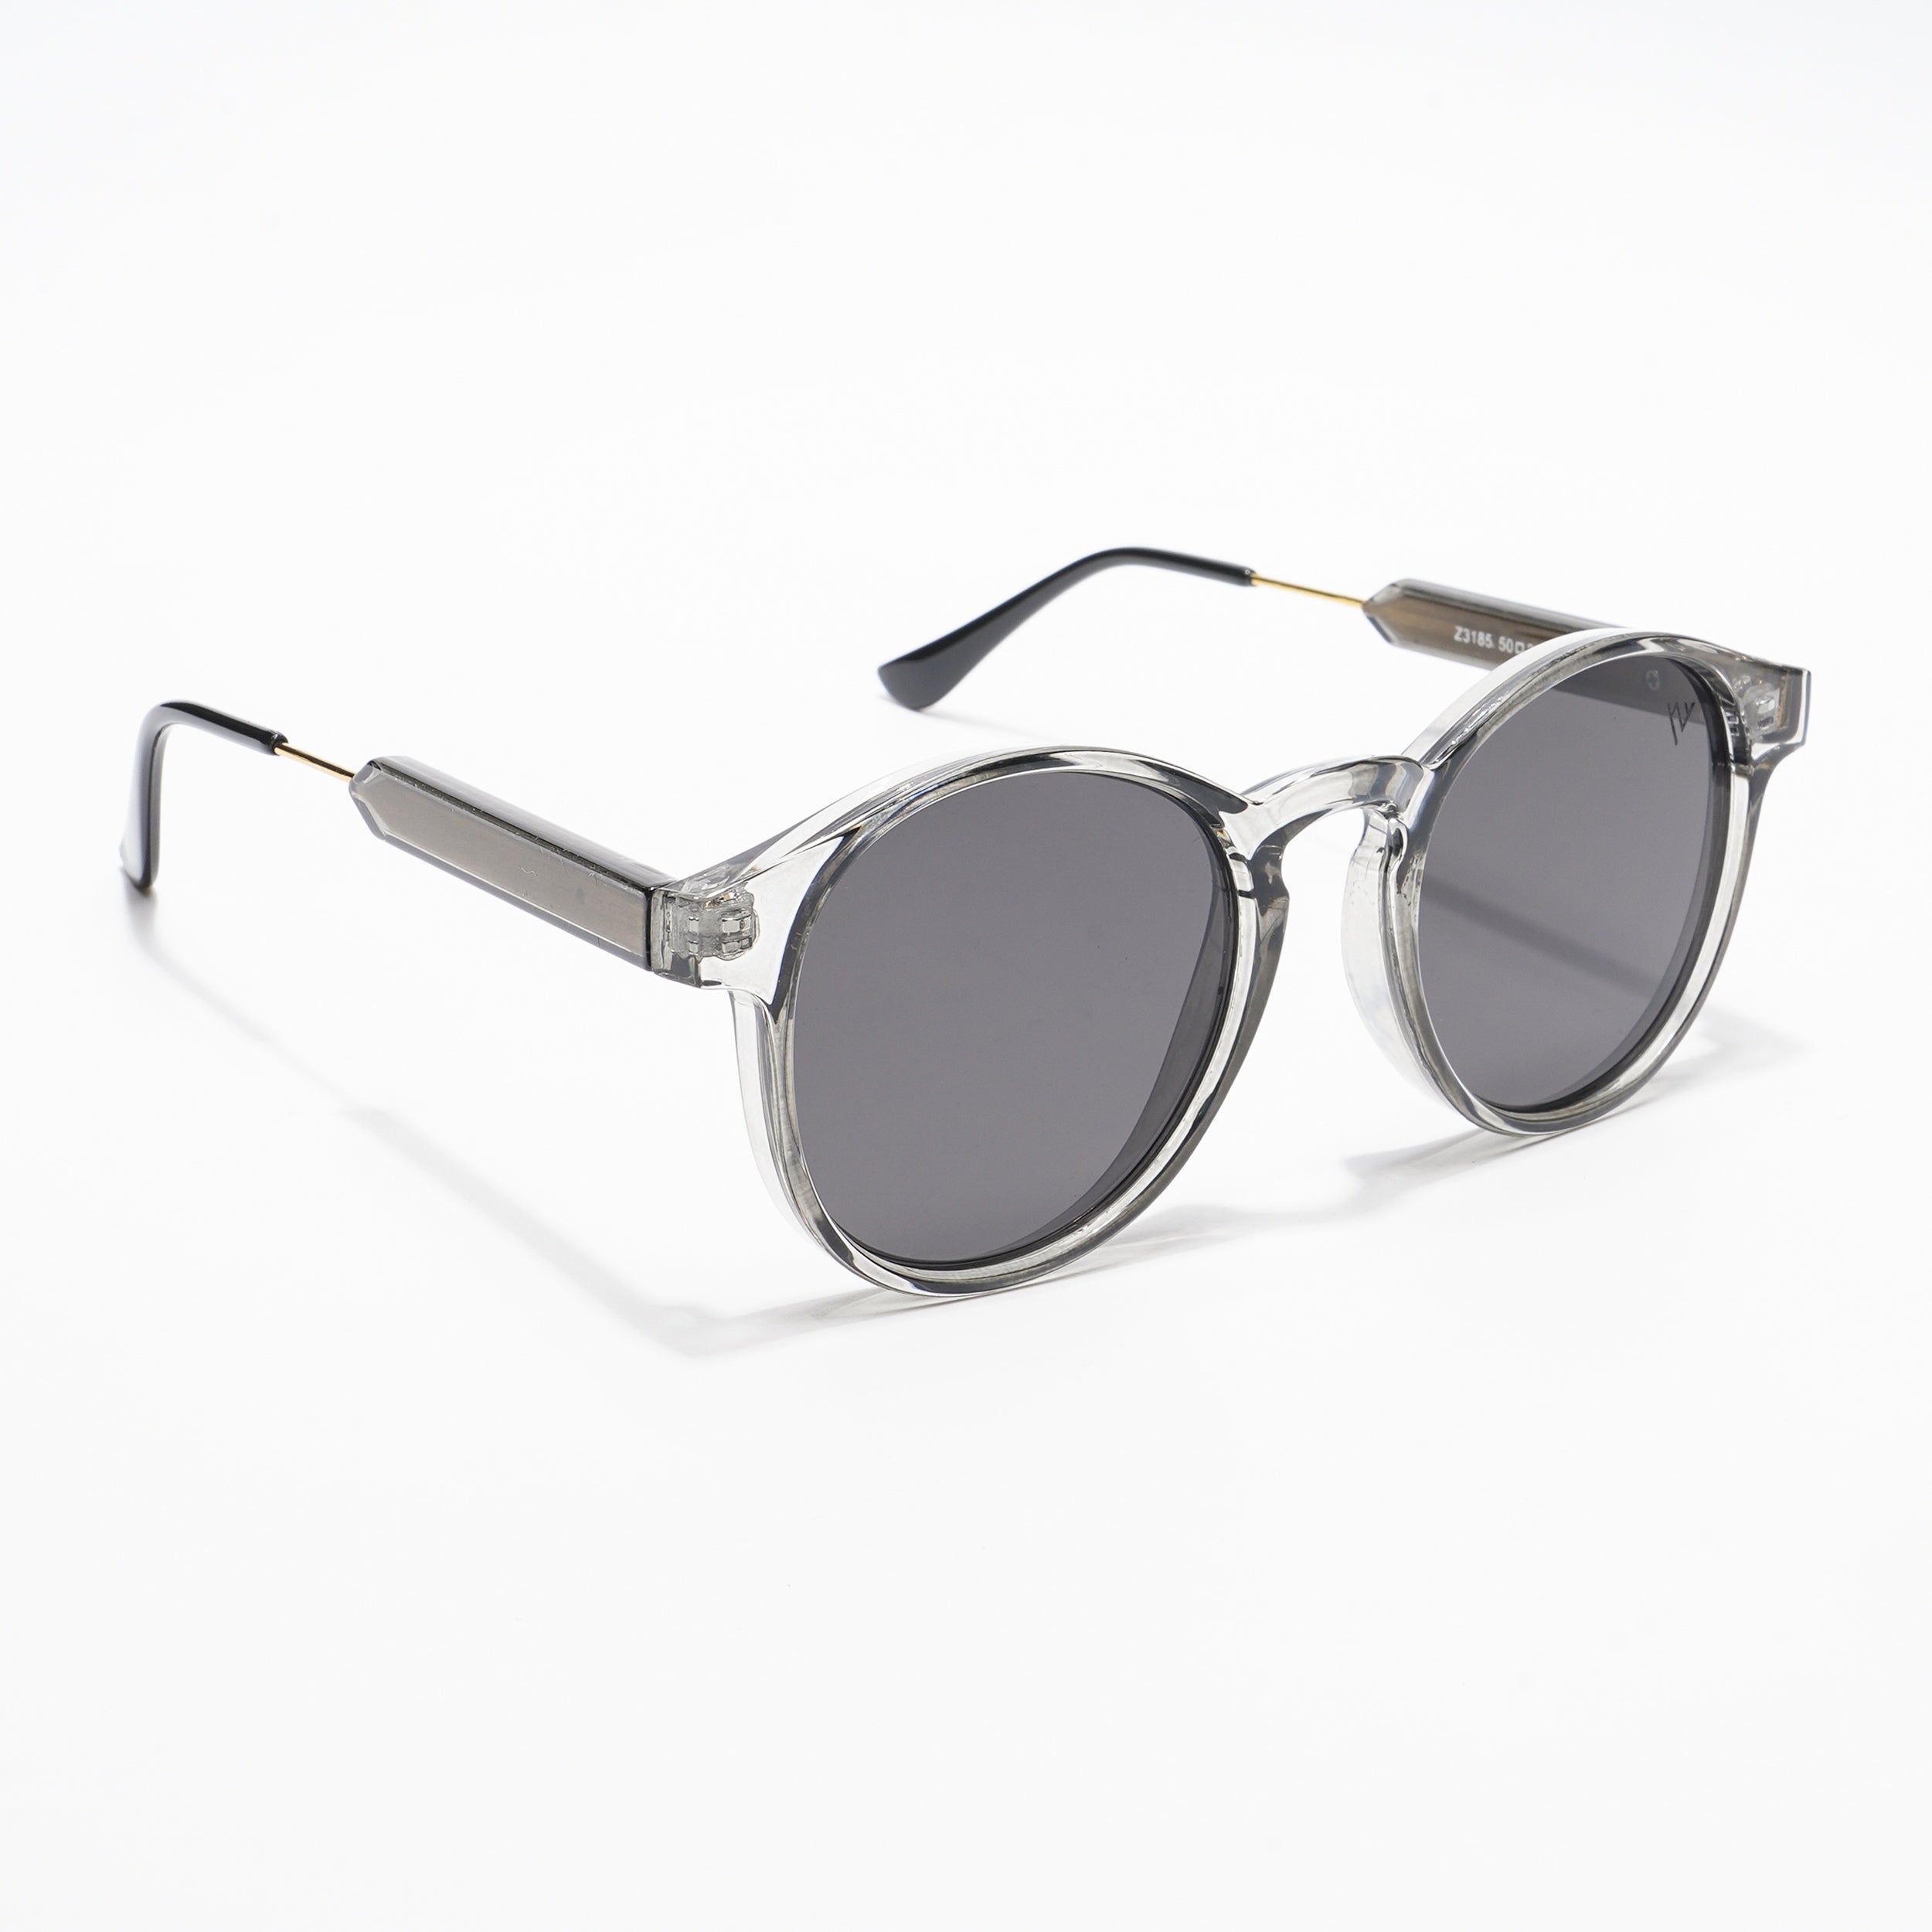 Voyage Grey Round Sunglasses - MG3878